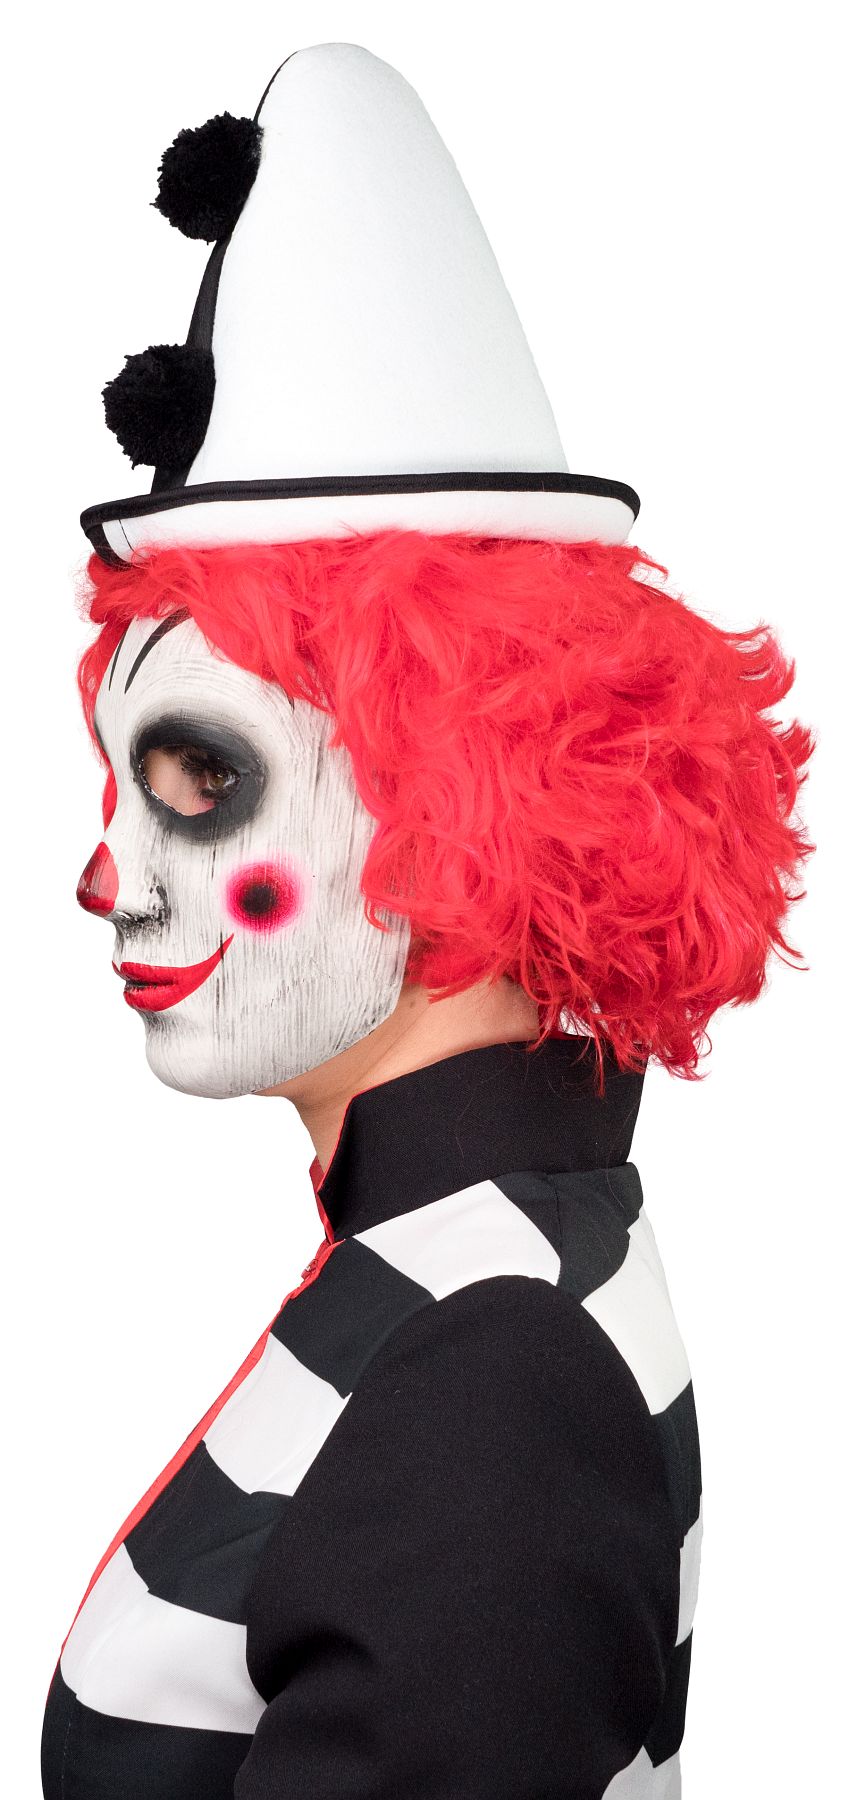 Masque de clown vénitien